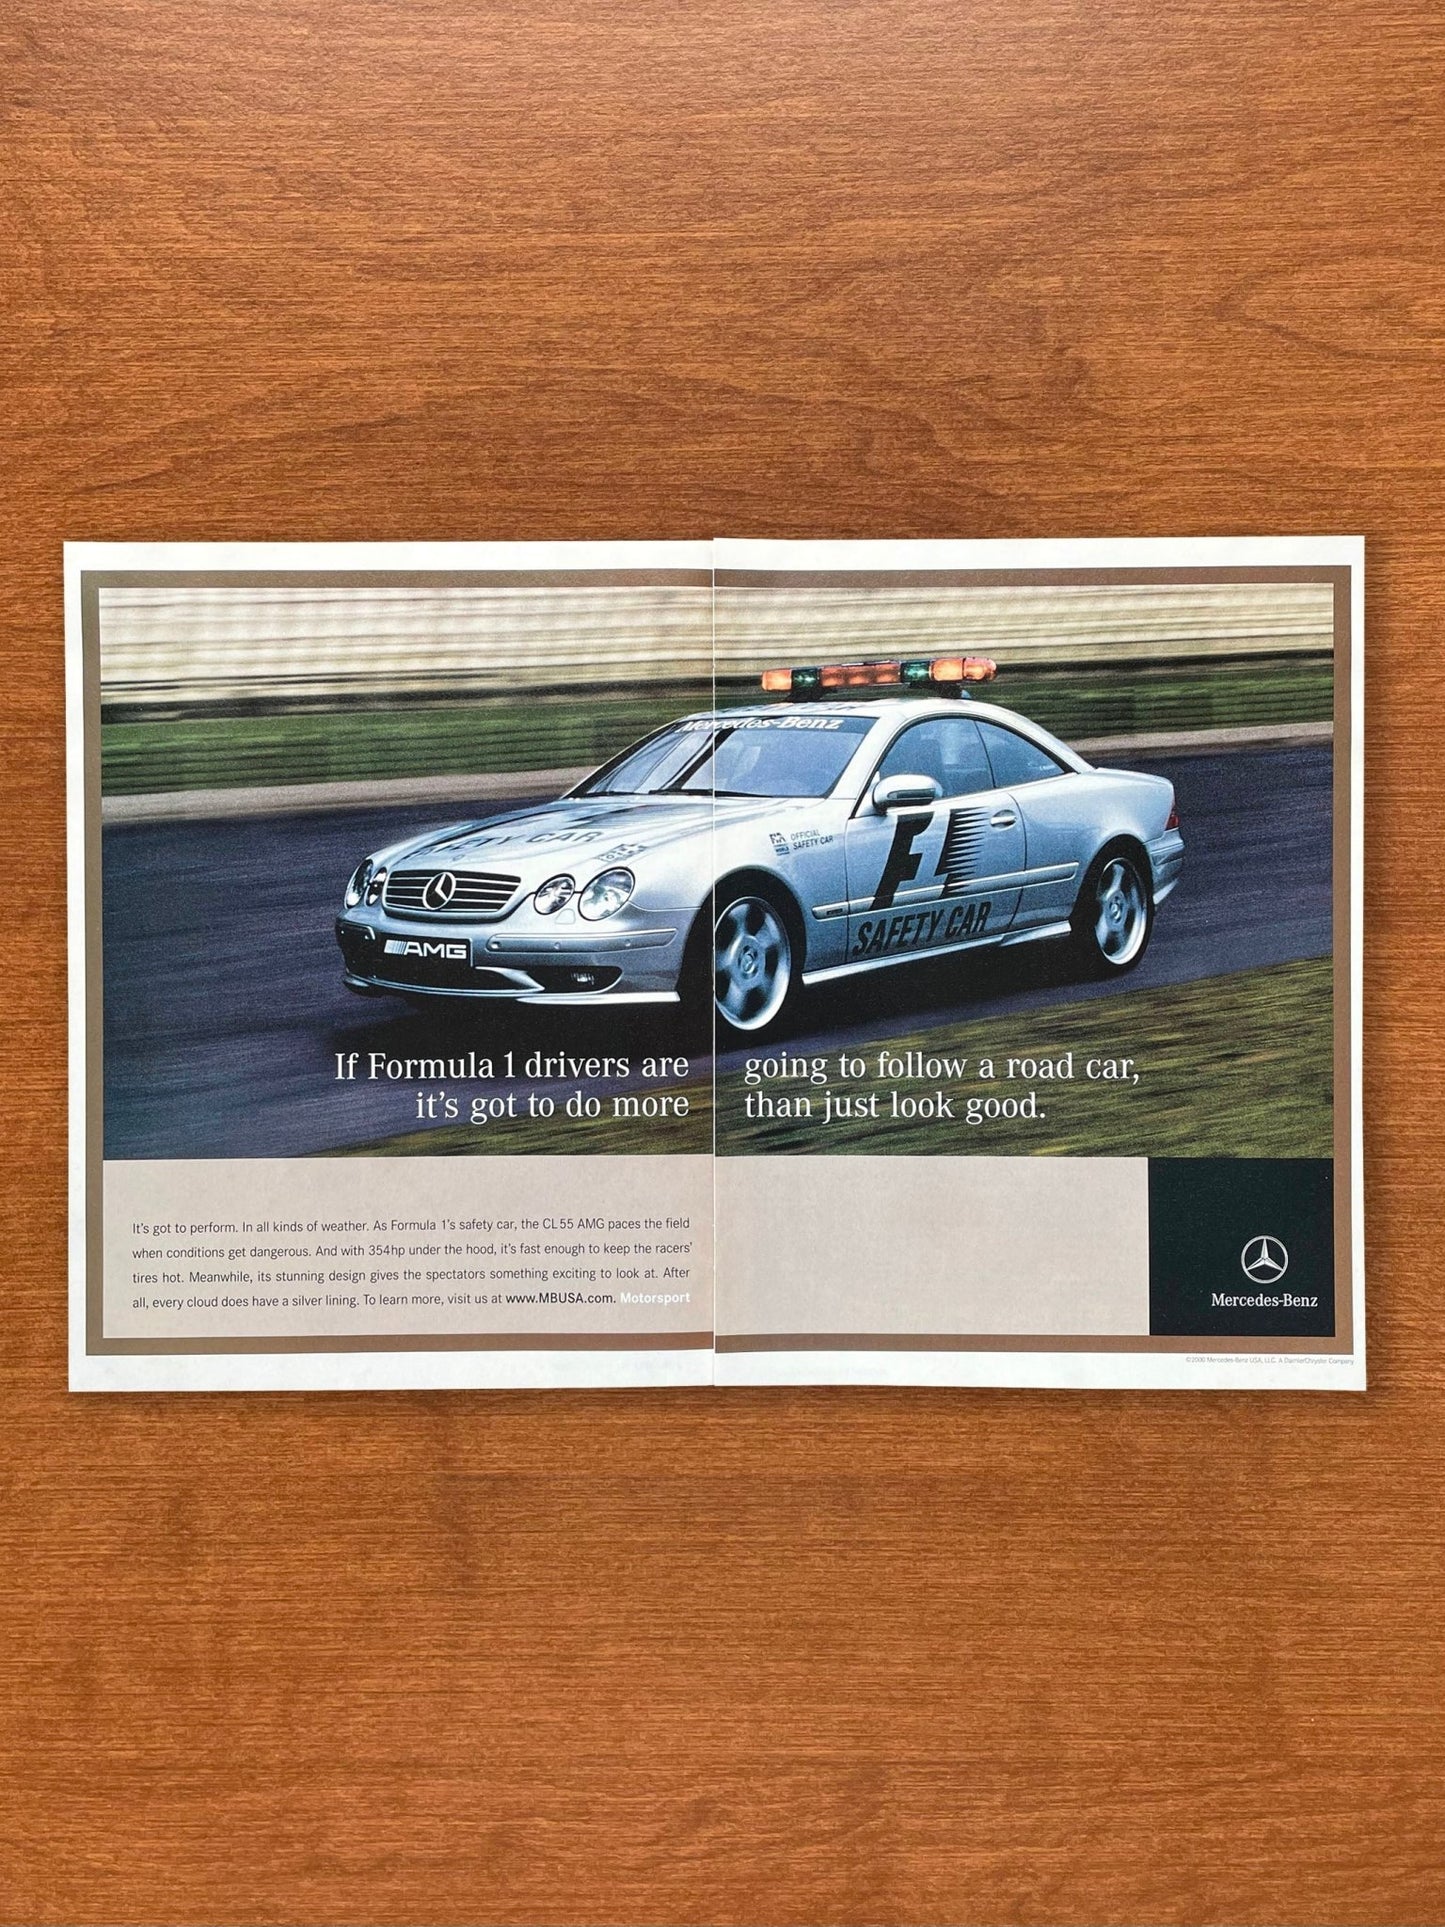 2000 Mercedes Benz CL 55 AMG F1 safety car Advertisement